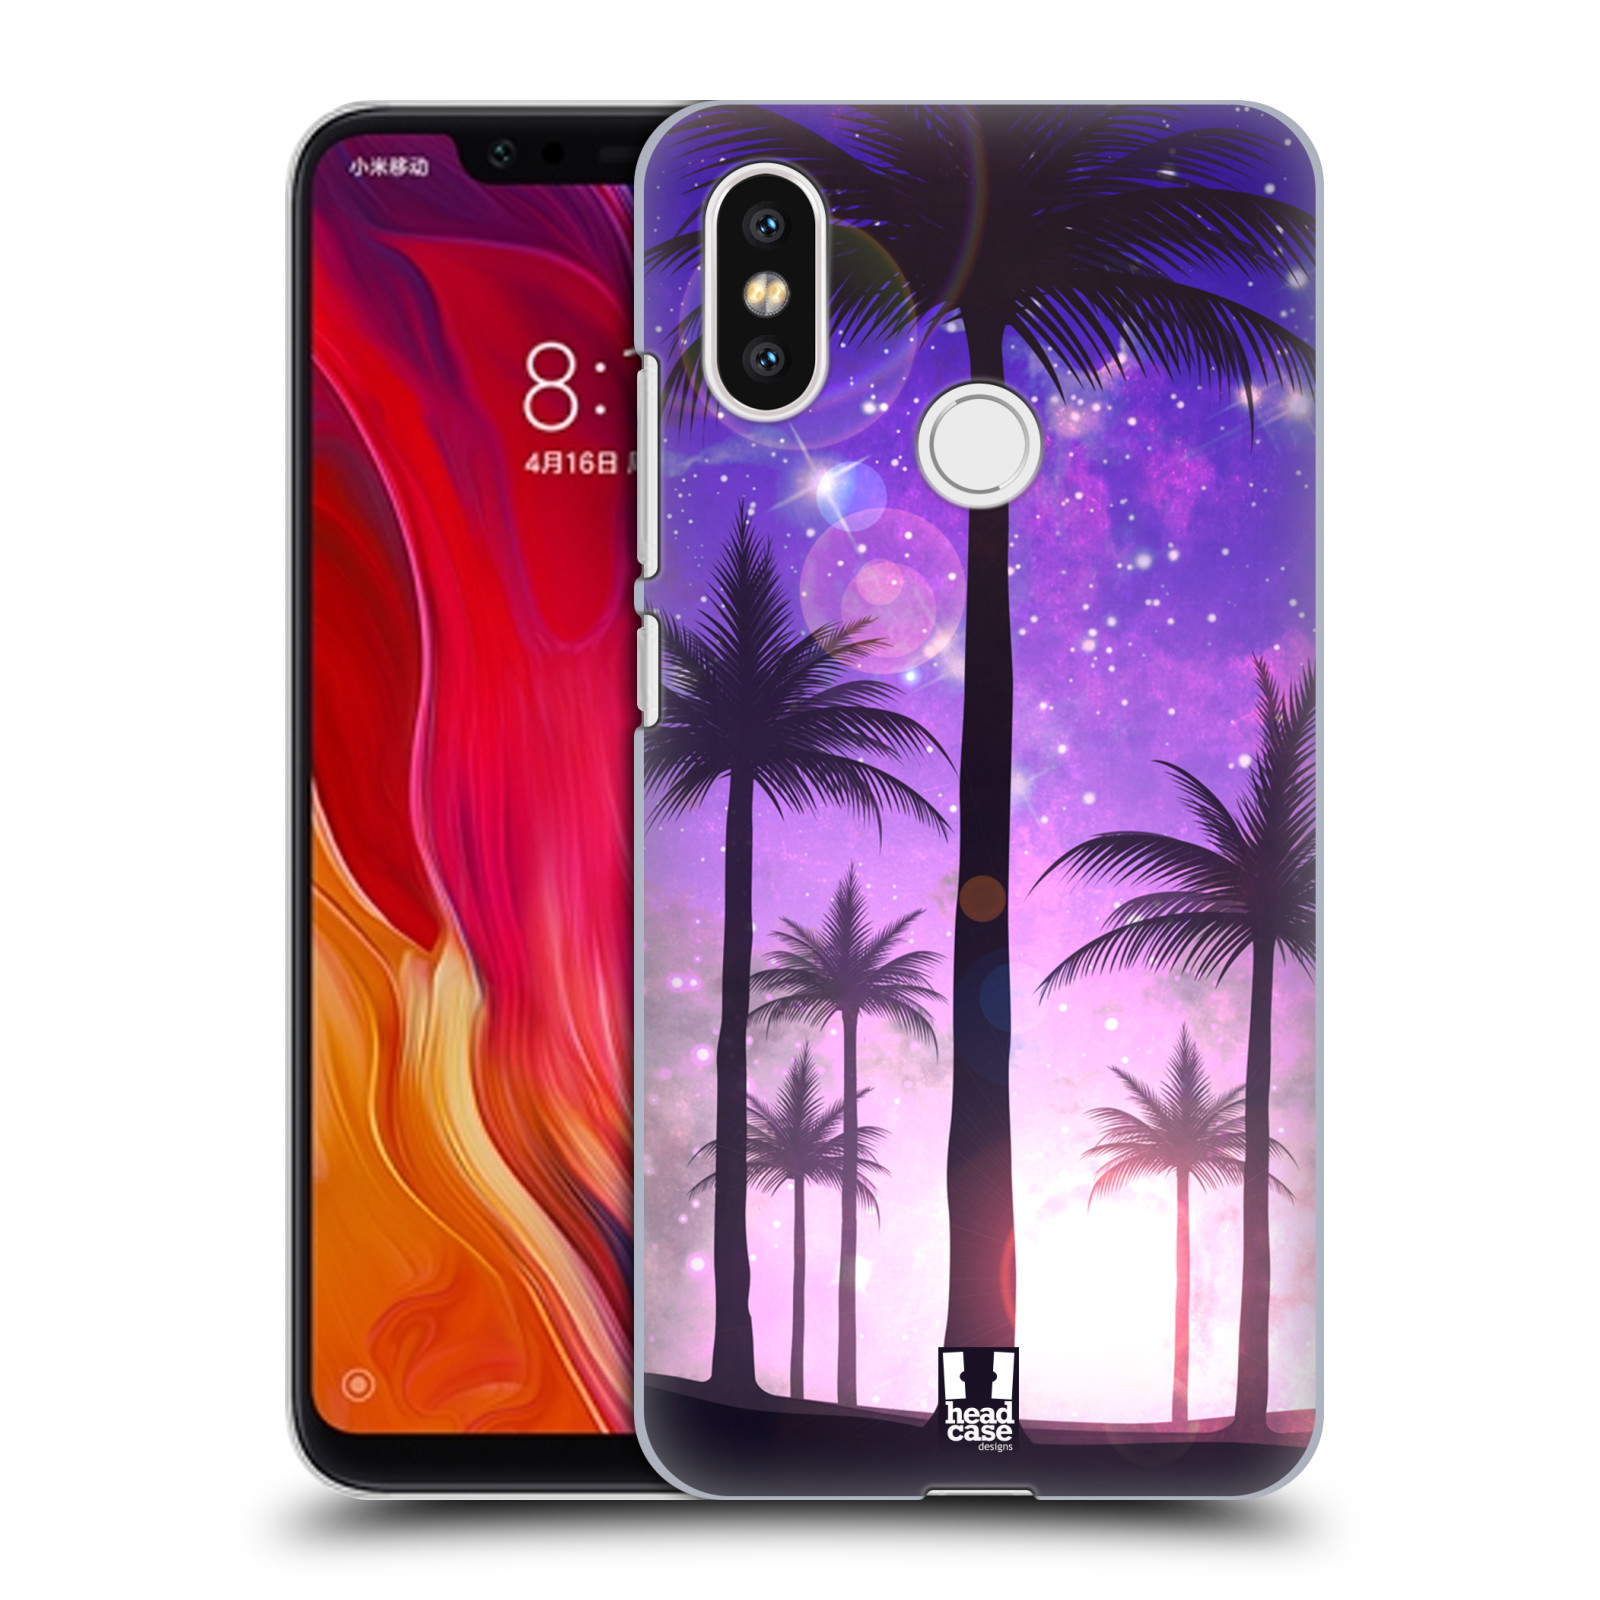 HEAD CASE plastový obal na mobil Xiaomi Mi 8 vzor Kreslený motiv silueta moře a palmy FIALOVÁ